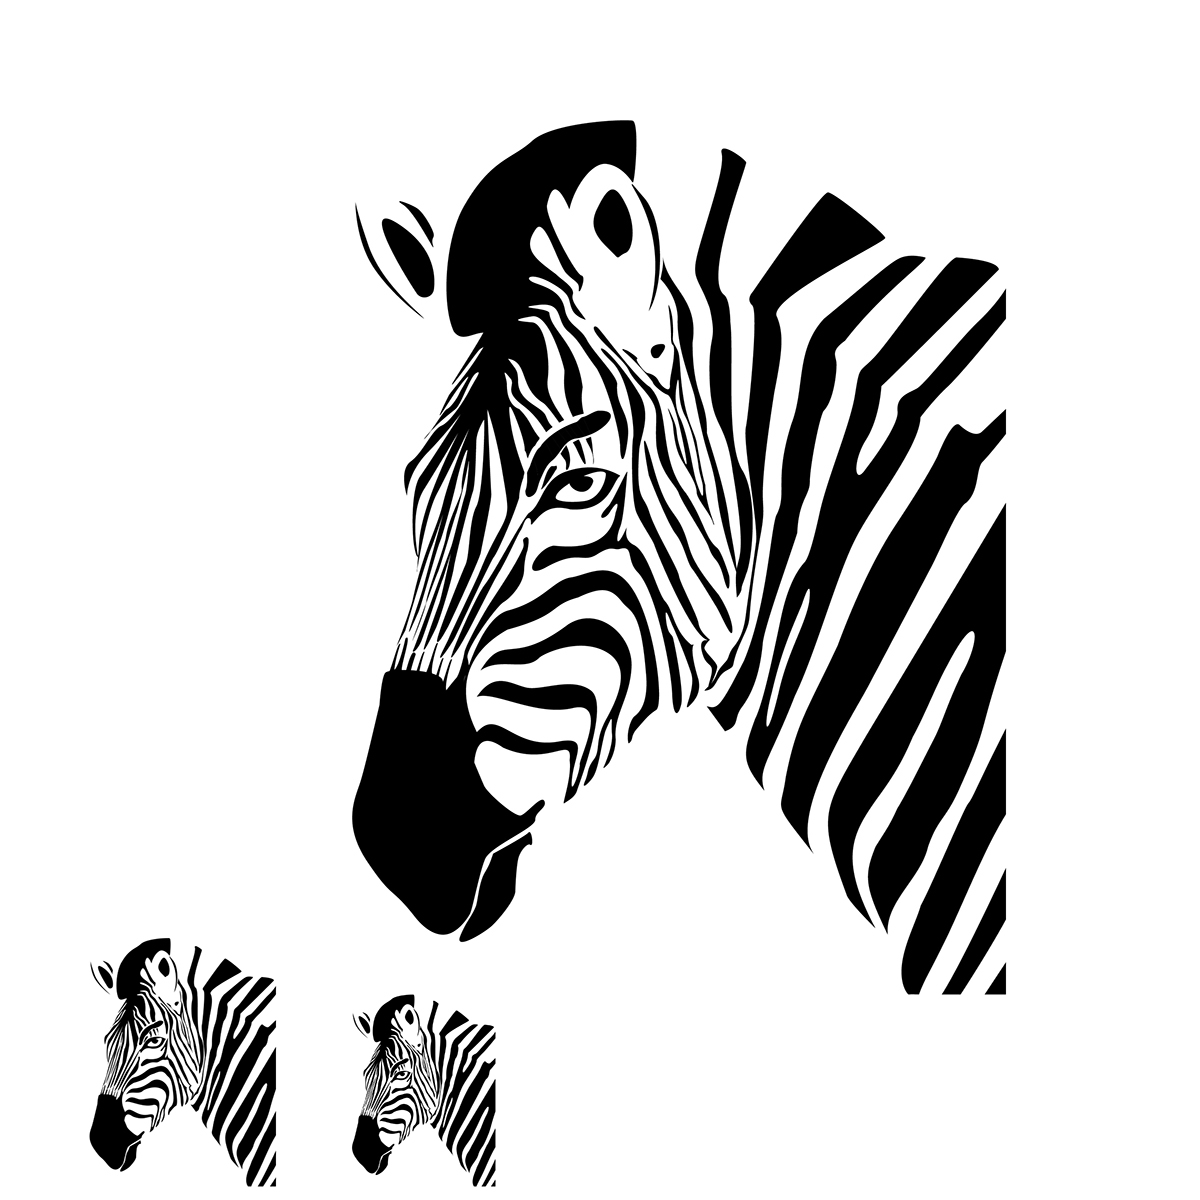 Angry zebra dingbat.